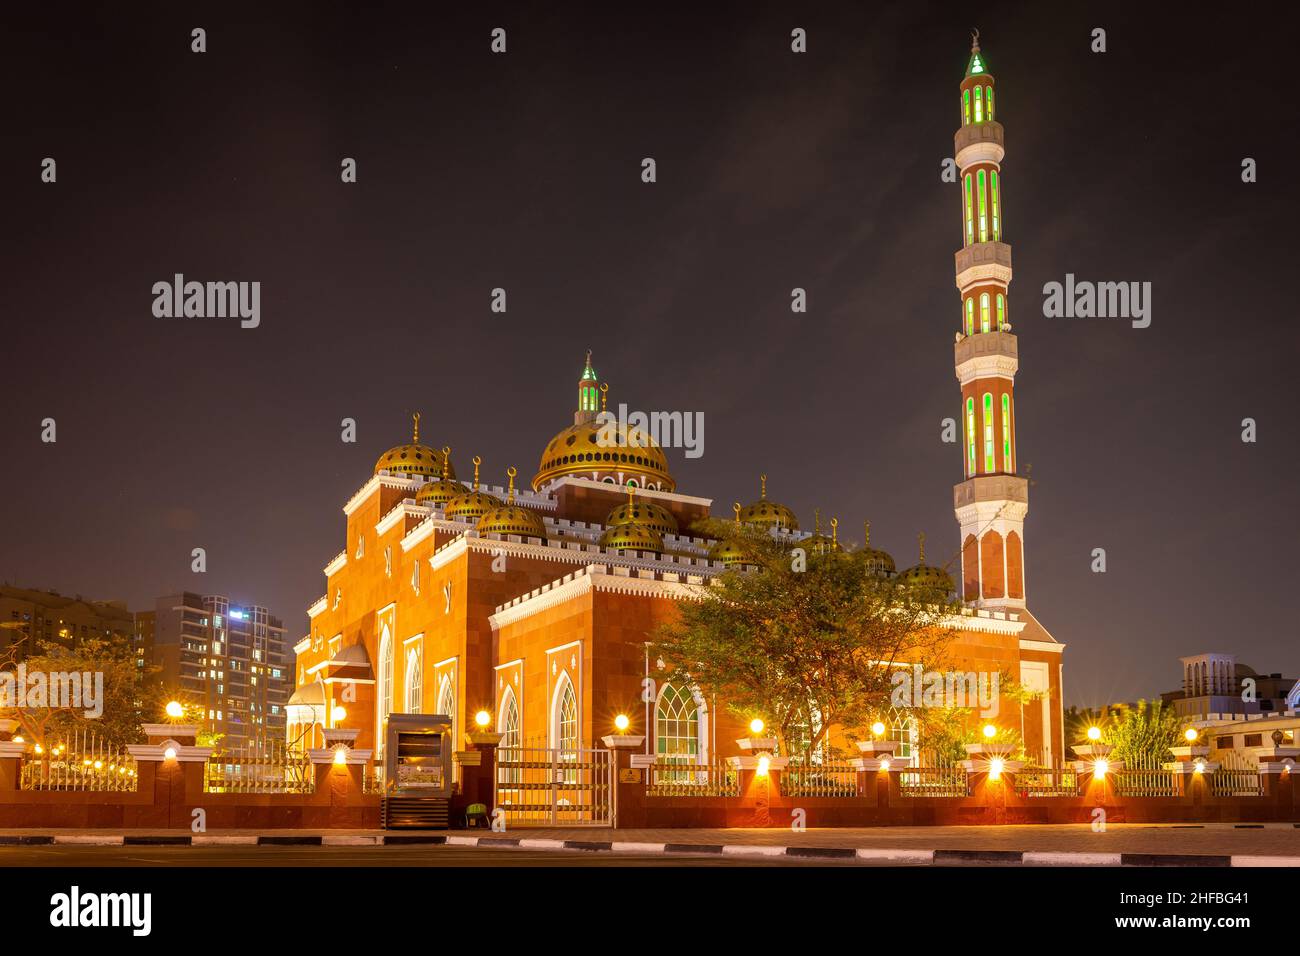 Dubai, UAE, 24.09.21. Al Salam Mosque (Masjid) in Al Barsha, Dubai, mosque with red facade and golden ornaments at night with green illuminations. Stock Photo